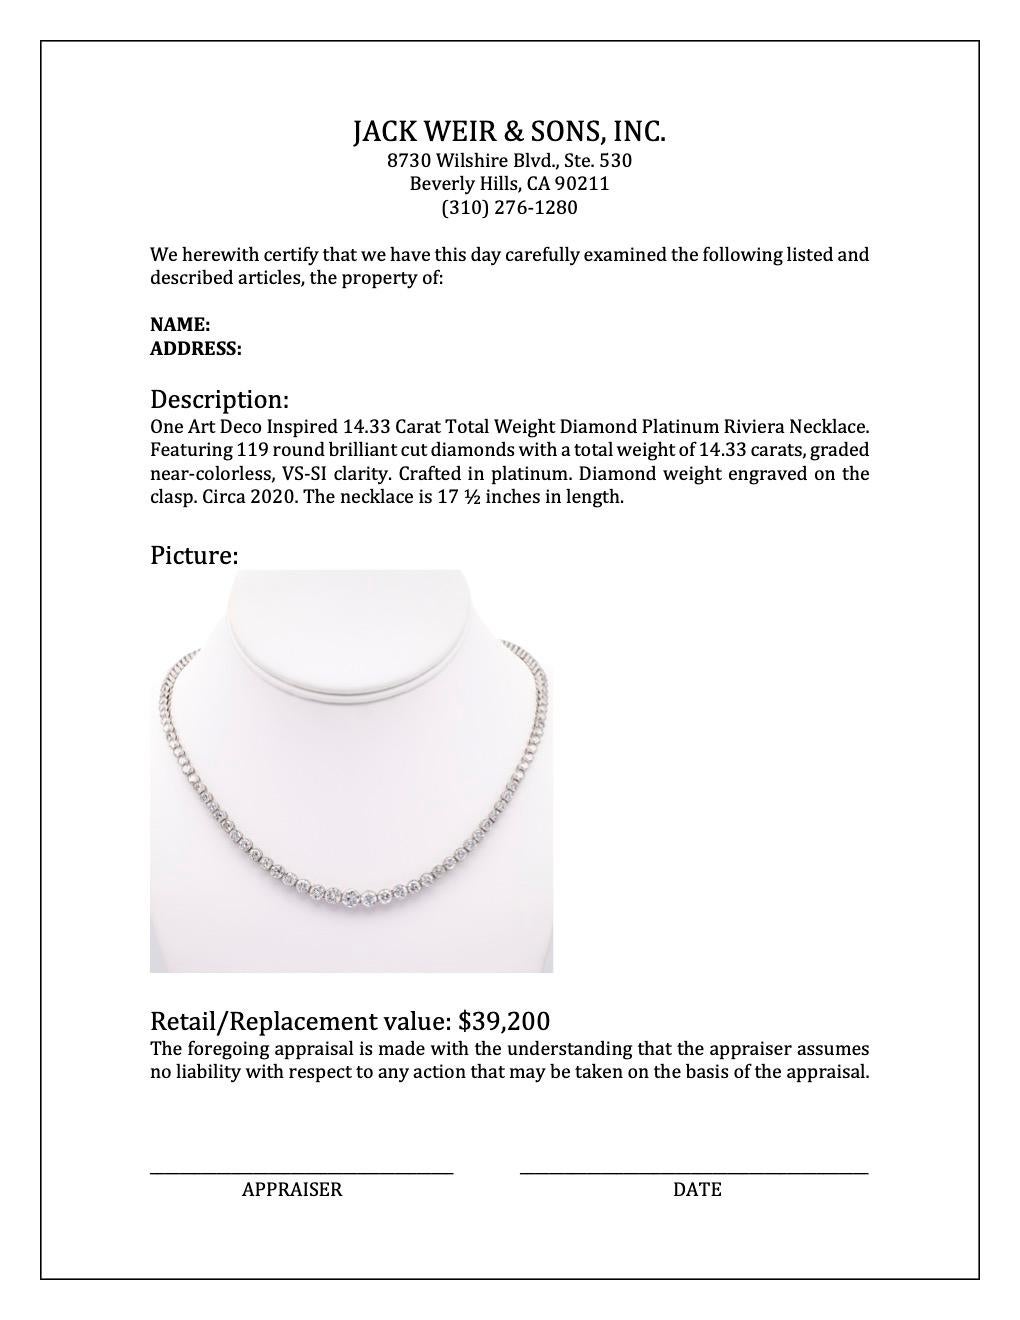 Art Deco Inspired 14.33 Carat Total Weight Diamond Platinum Riviera Necklace 2